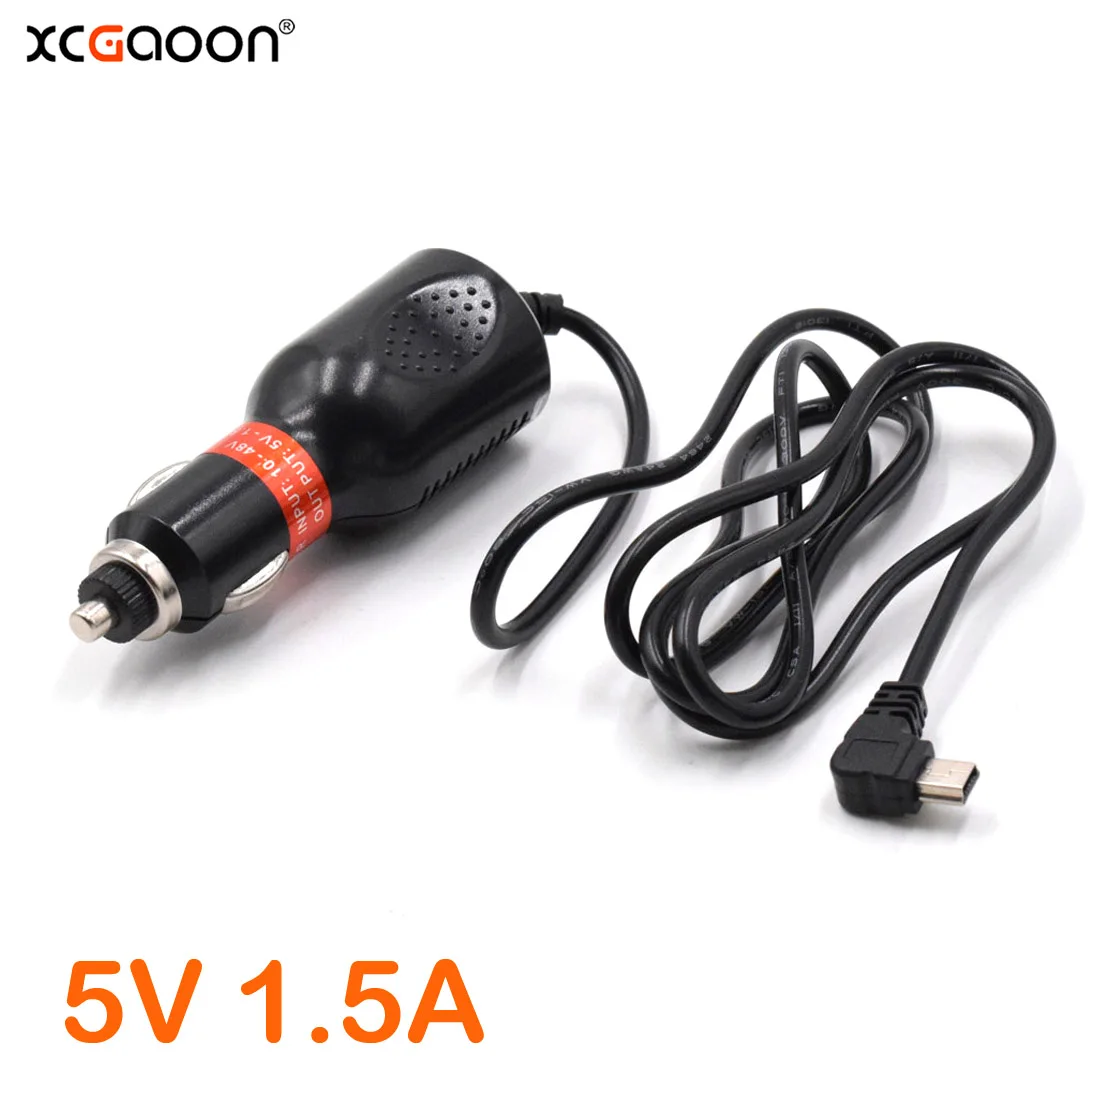 

XCGaoon Mini USB 5V 1.5A Car Charger Adapter for Car Dashcam Radar Detector GPS Camera DVR, Length 1.2Meters